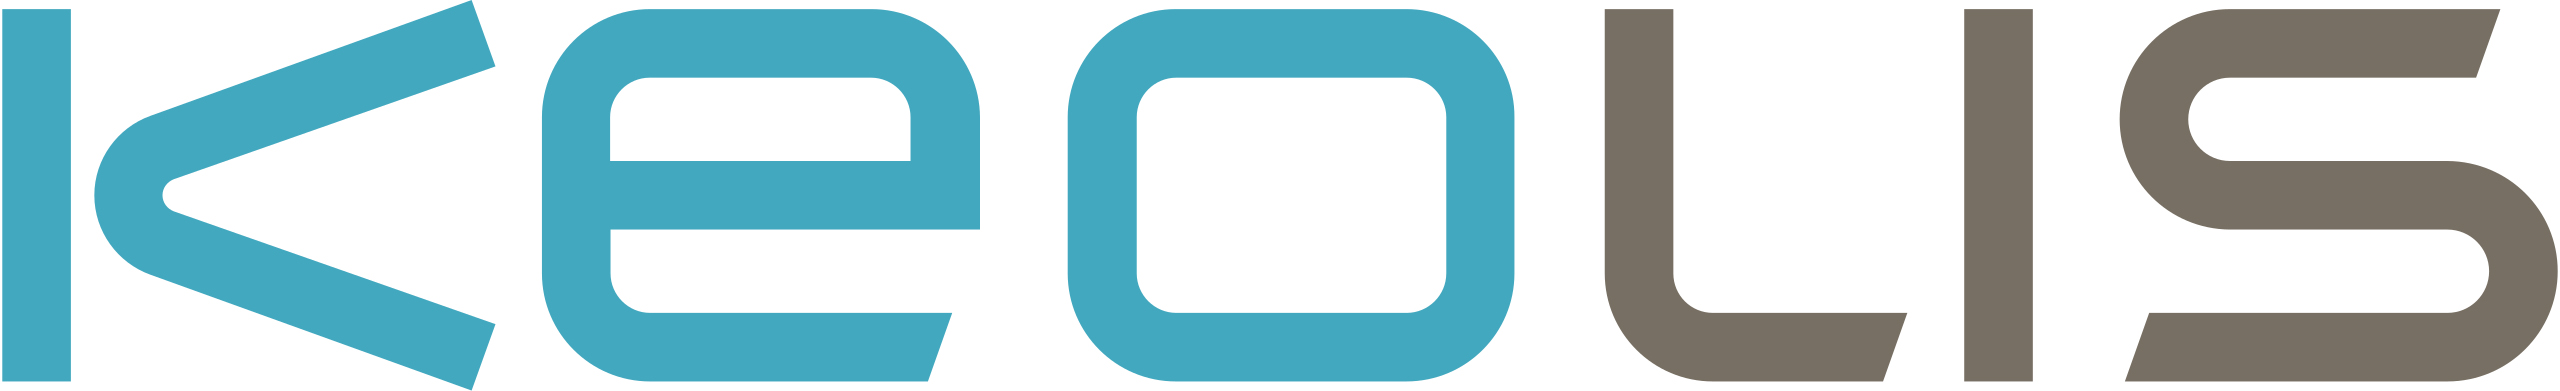 Keolis-2017-logo